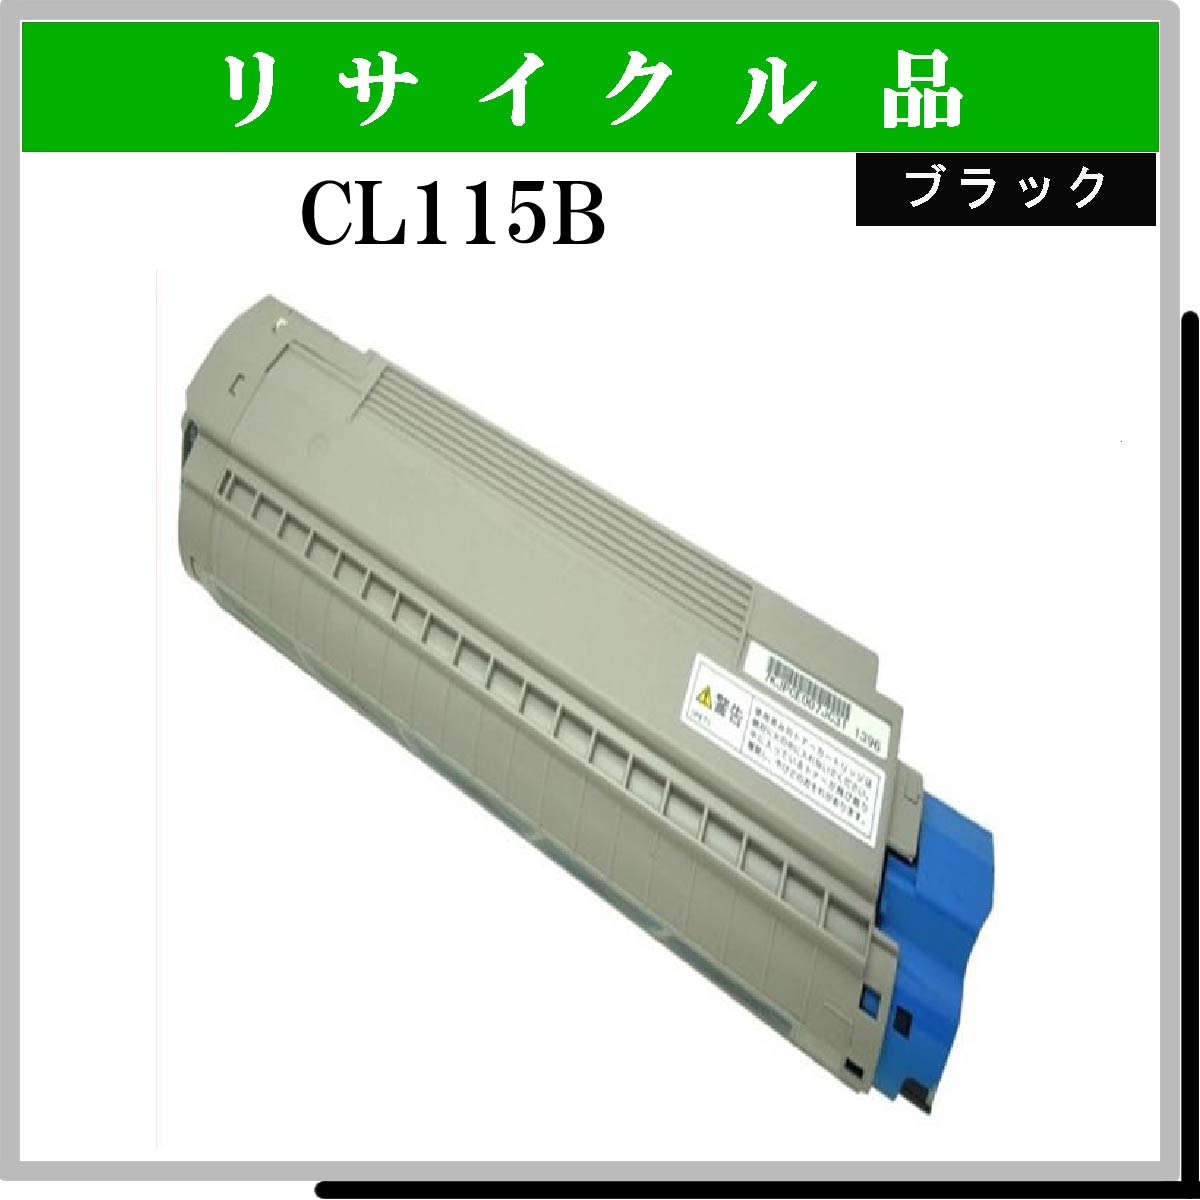 CL115B ﾌﾞﾗｯｸ - ウインドウを閉じる